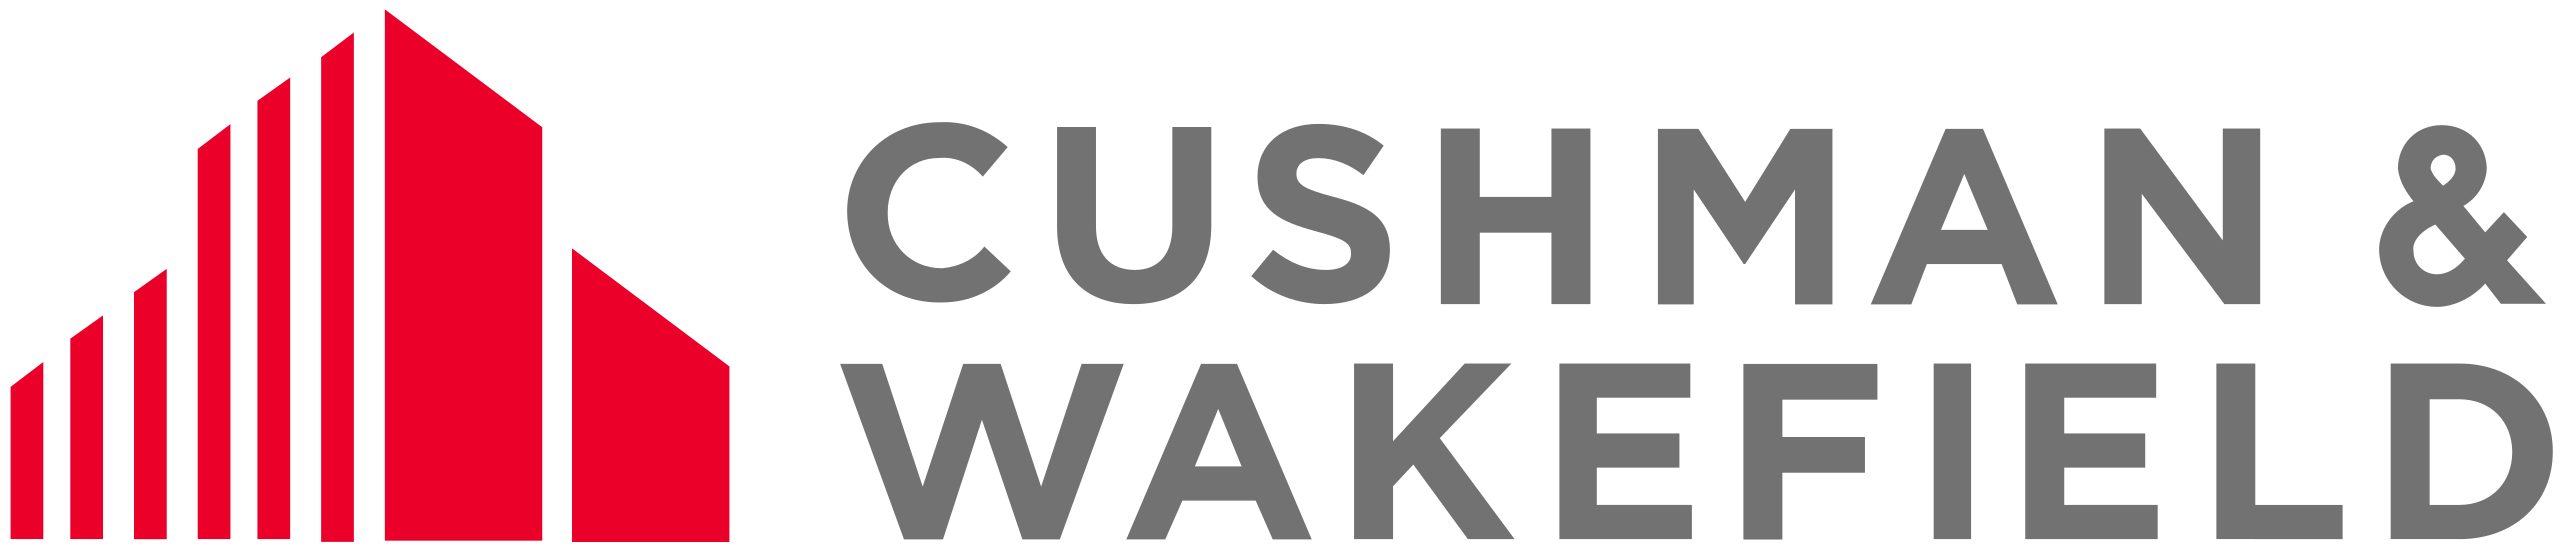 Cushman_&_Wakefield_logo